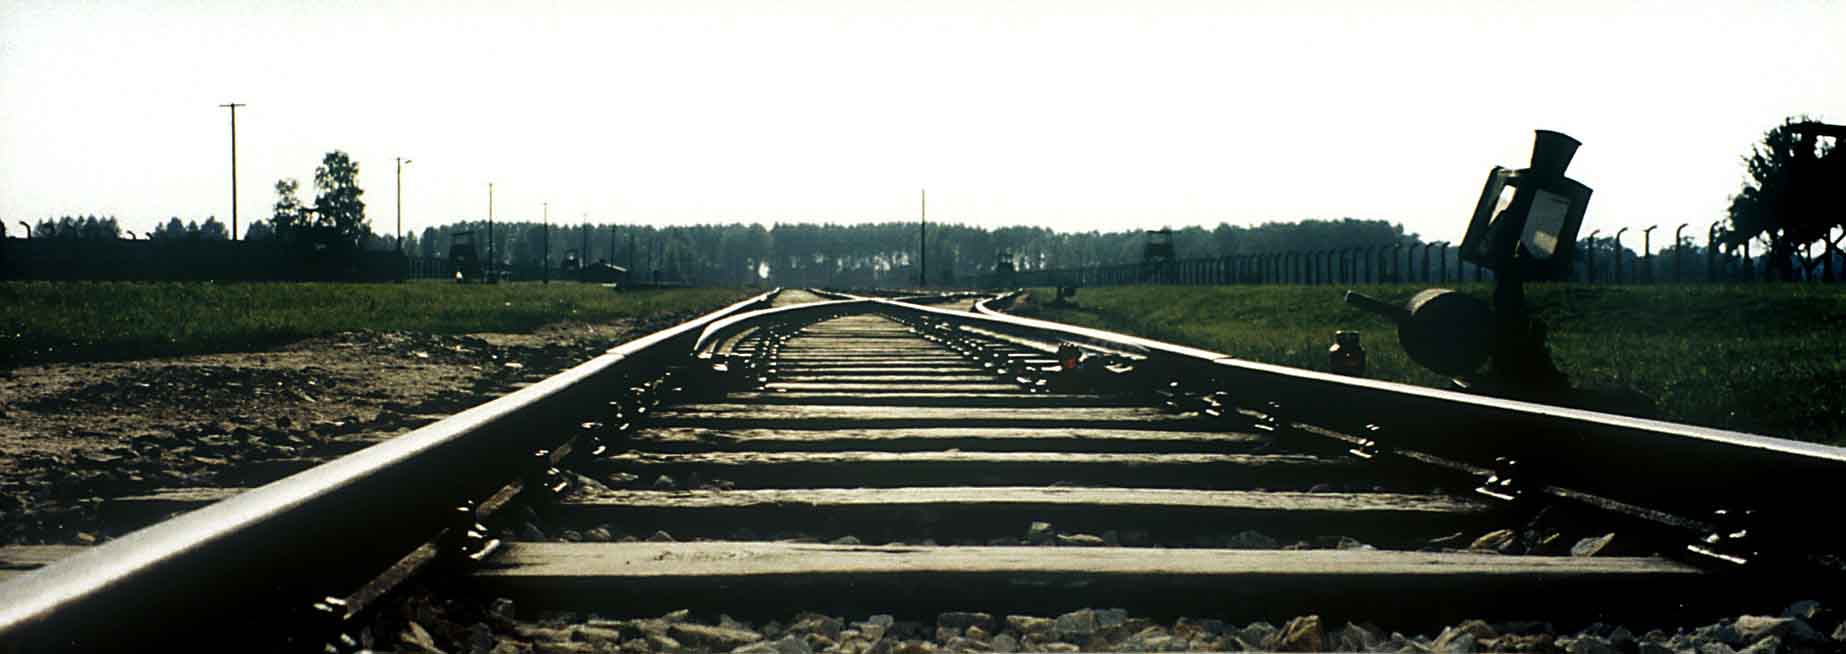 Auschwitz_fot.Ewa_Domanska_2004-3